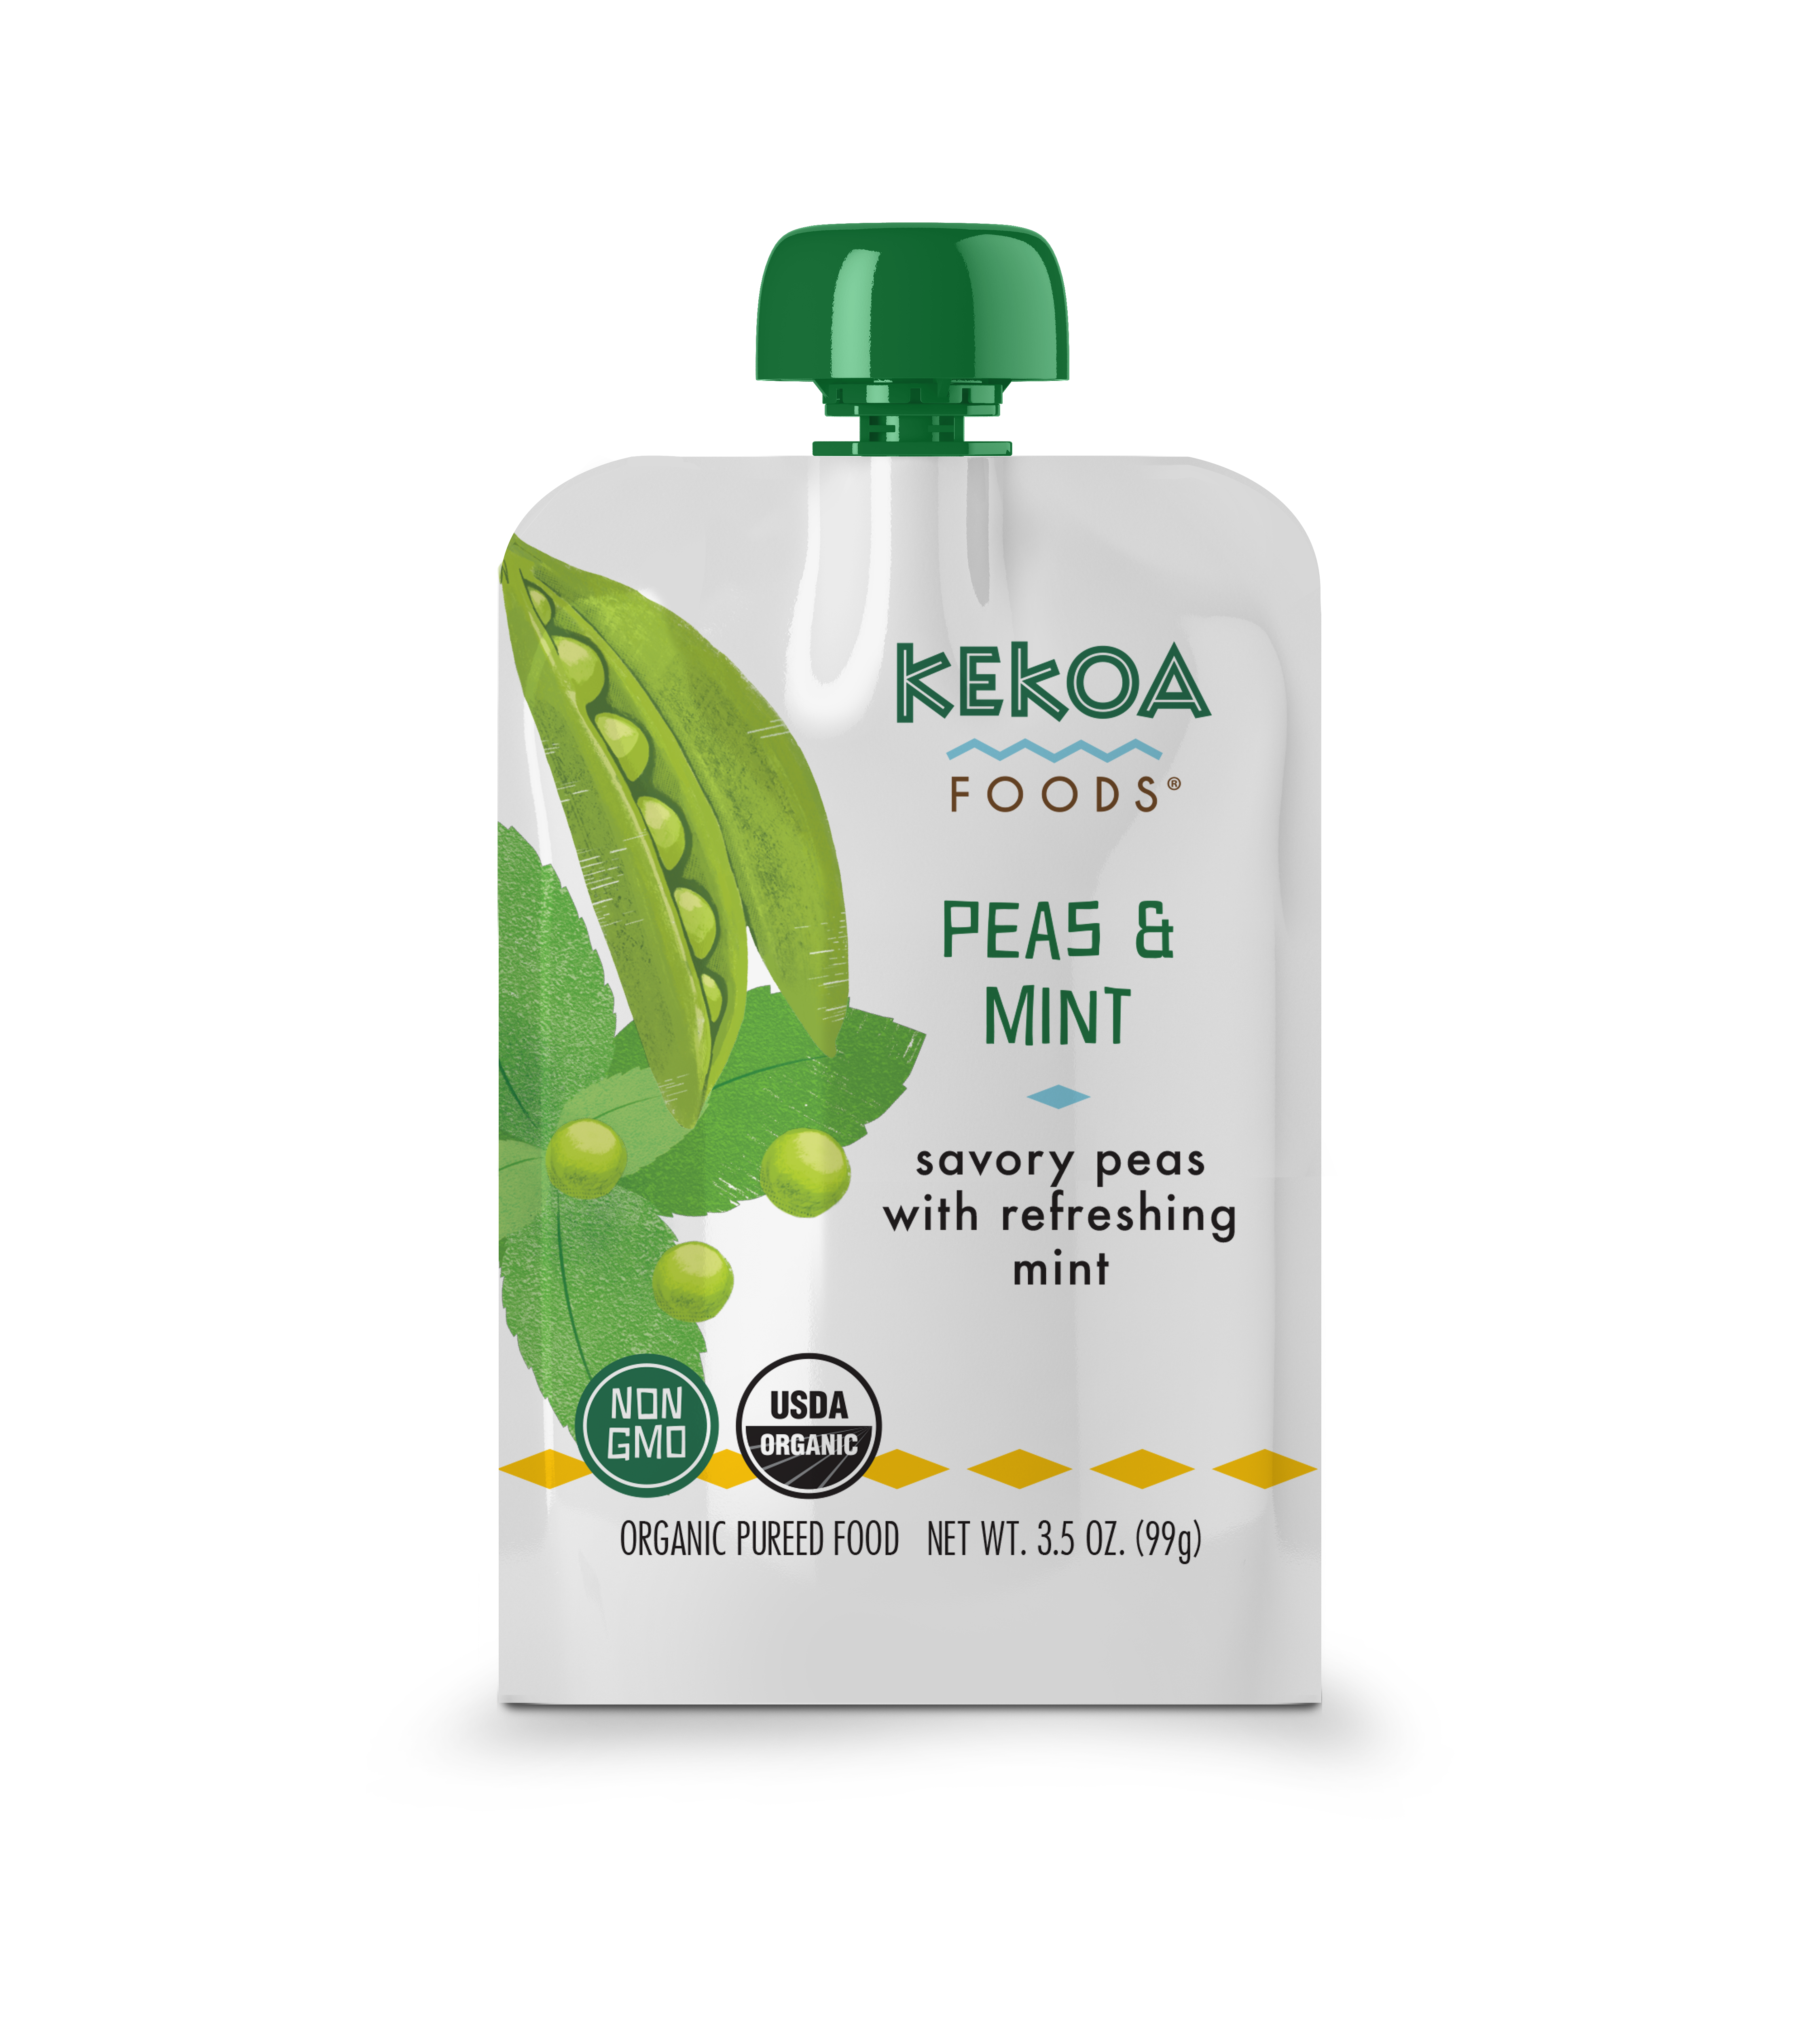 Kekoa Foods - Peas and Mint 6 innerpacks per case 3.5 oz